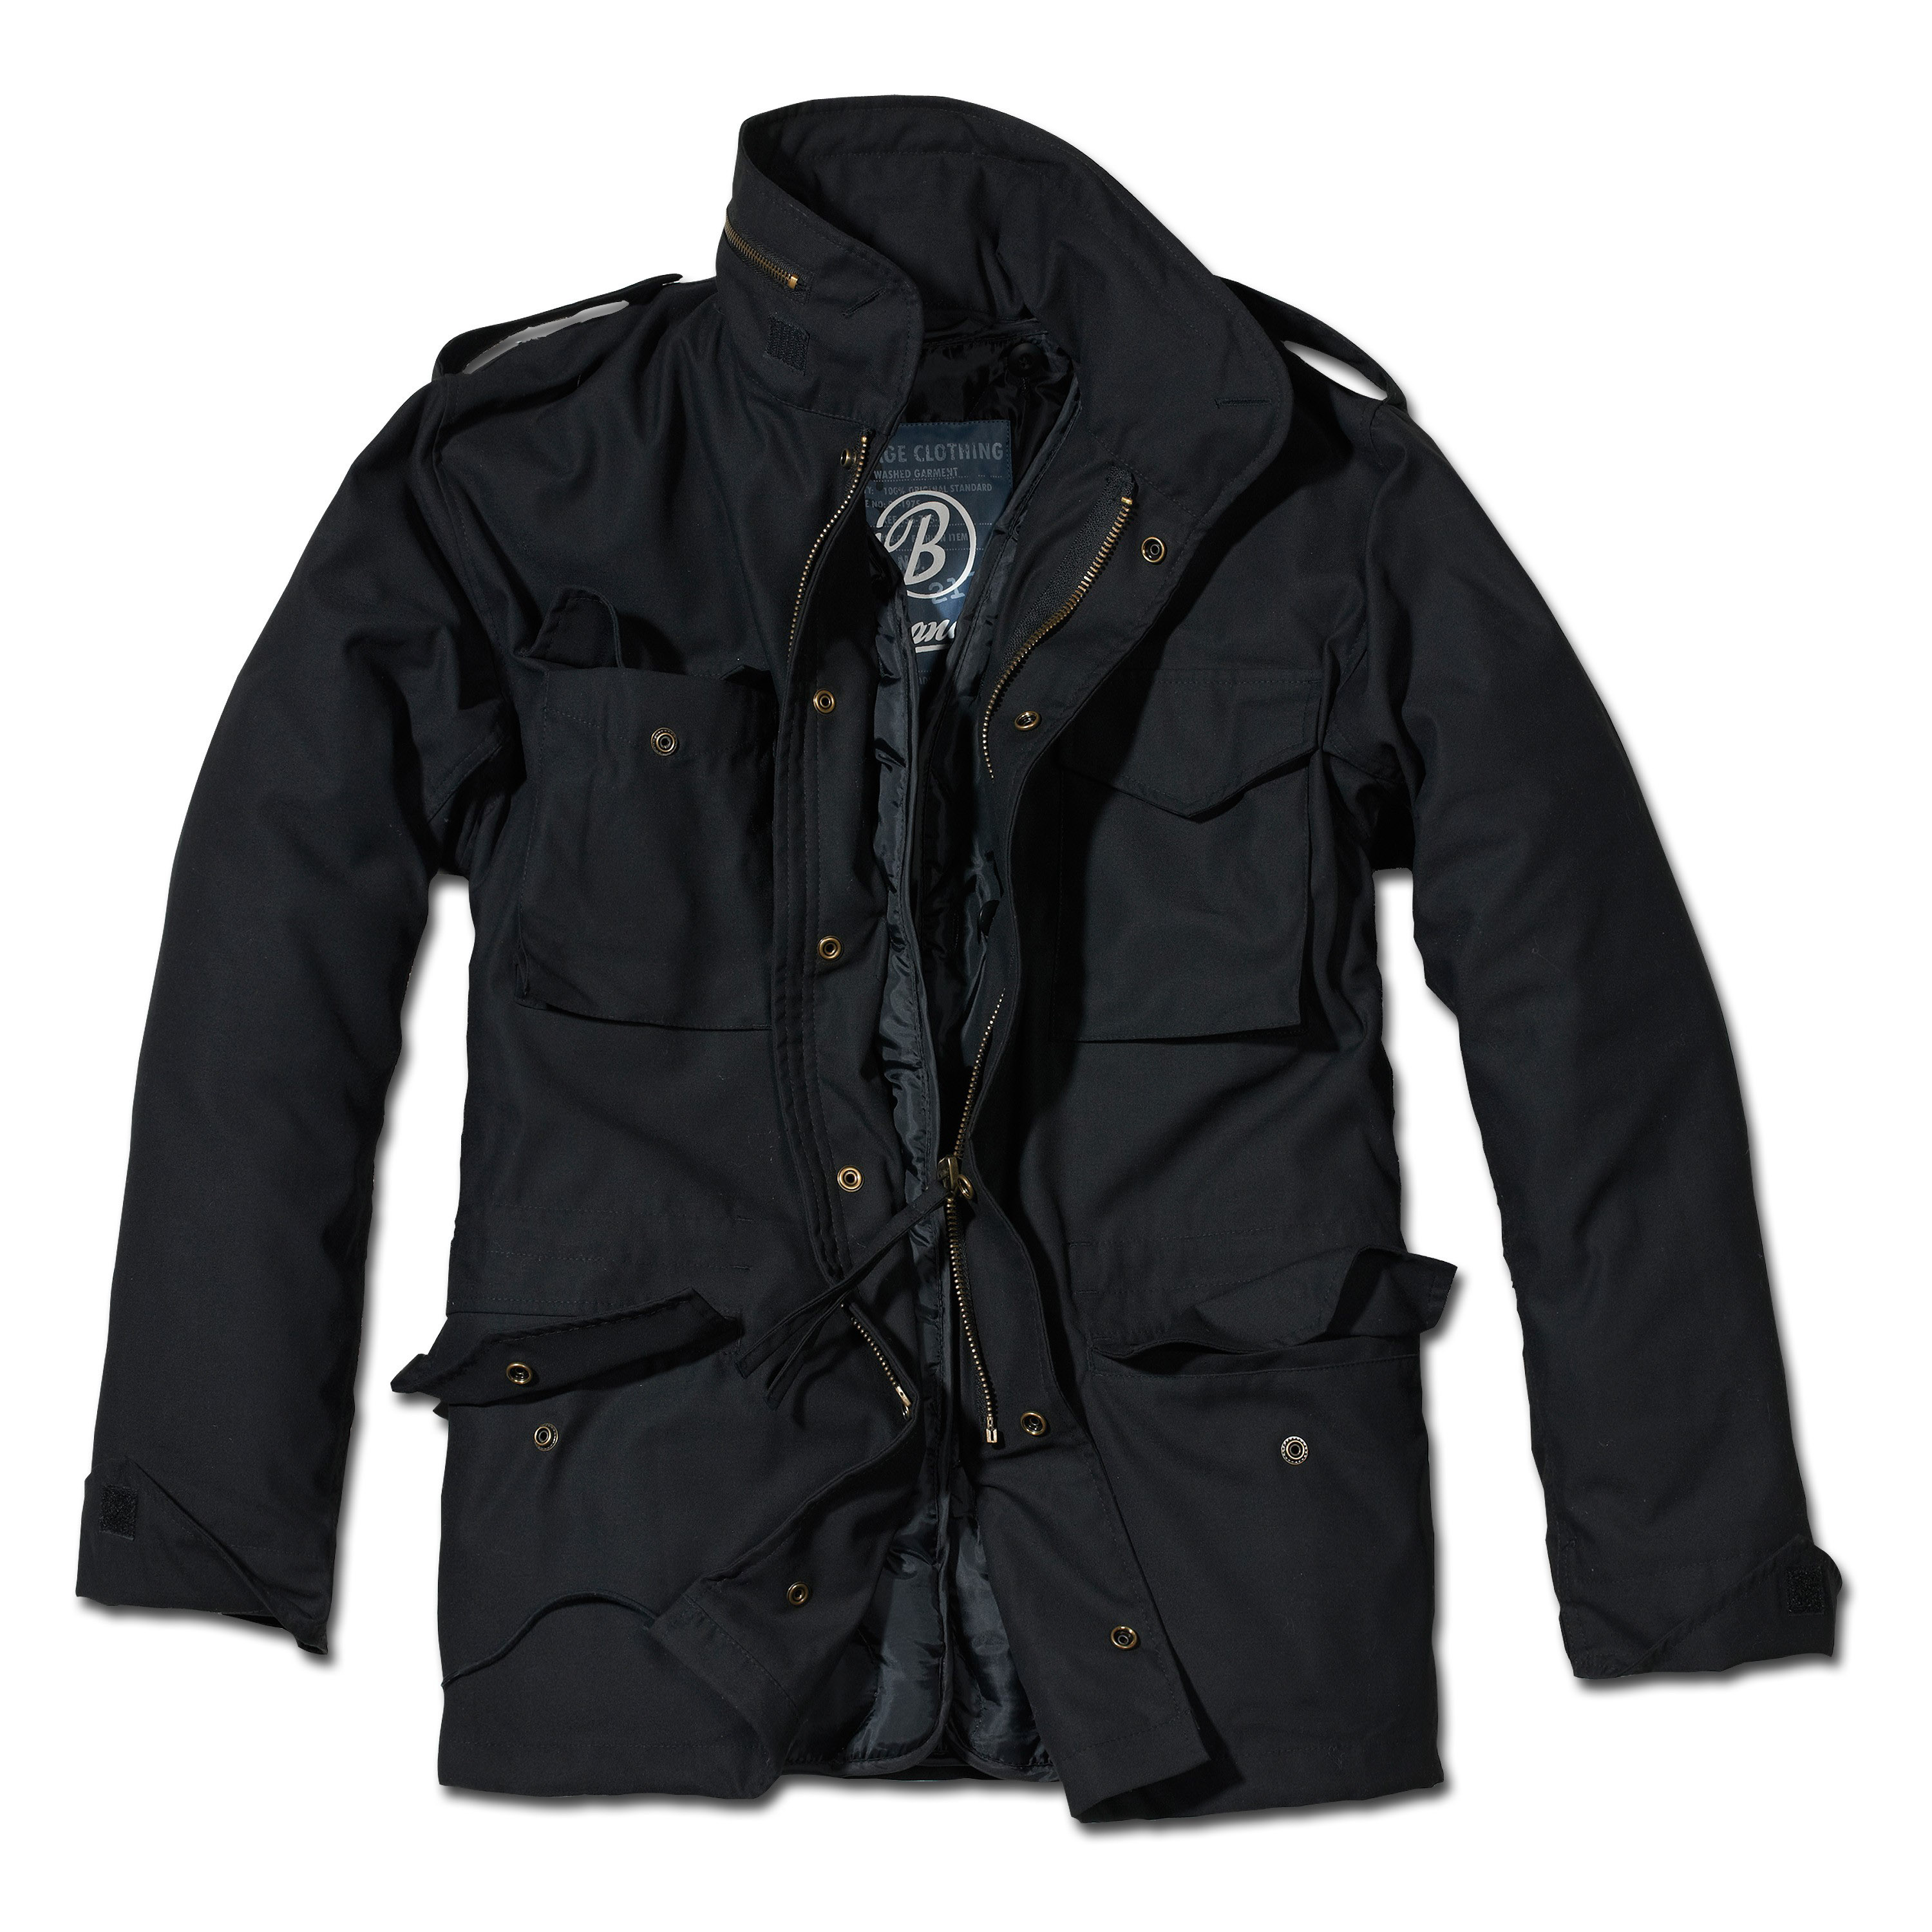 Куртка мужская осень цена. Brandit m65. M65 Standard Brandit. Куртка m65 Standard Brandit Black. M-65 Classic Brandit.